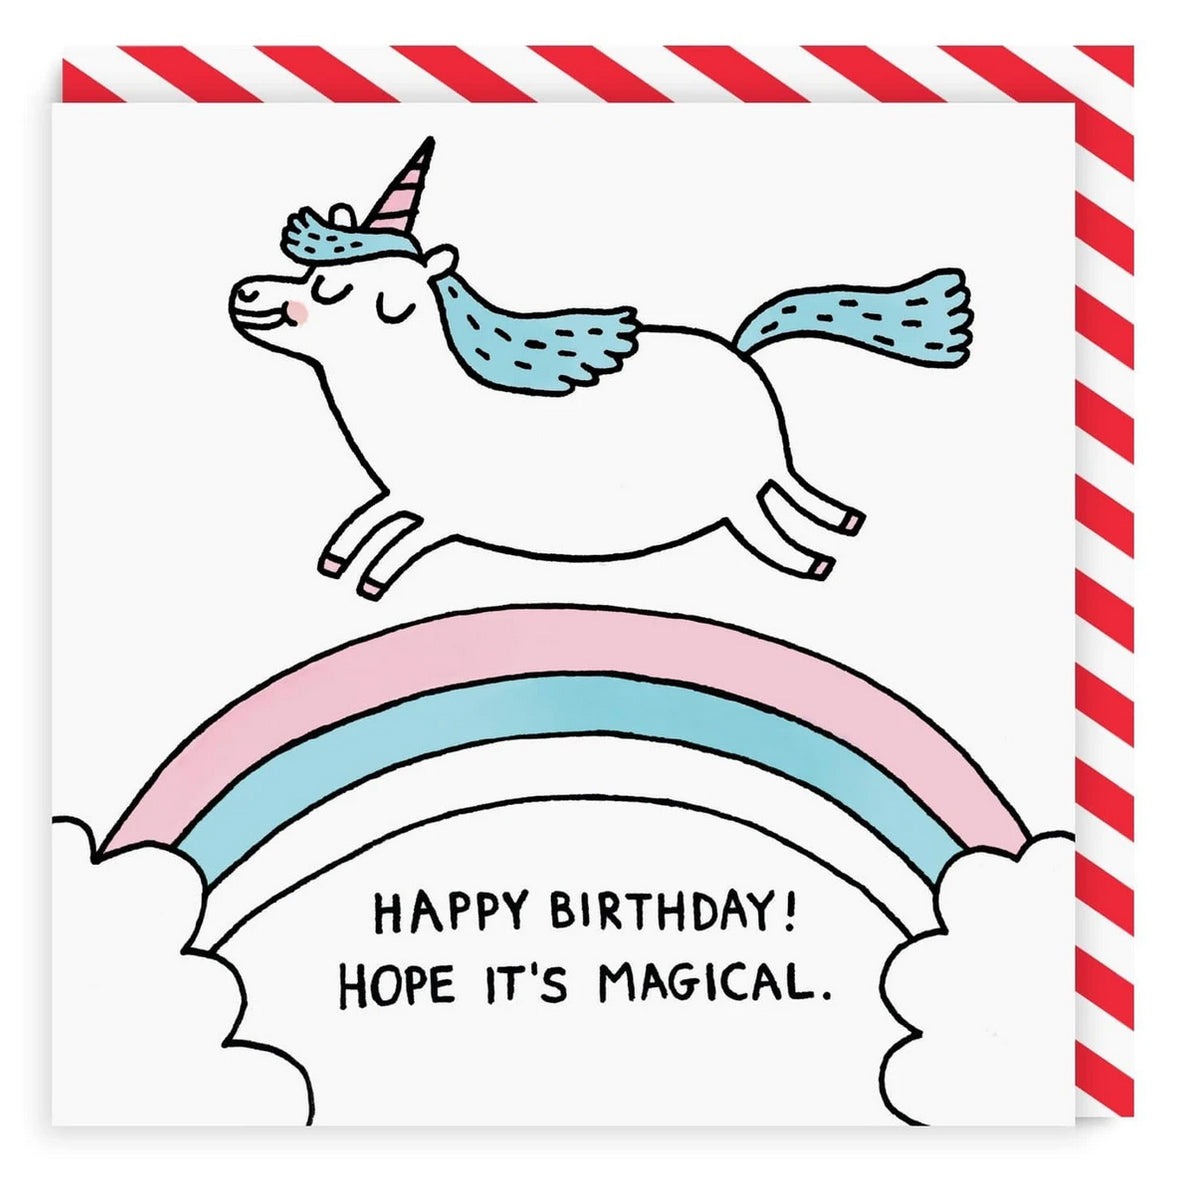 Magical Birthday card